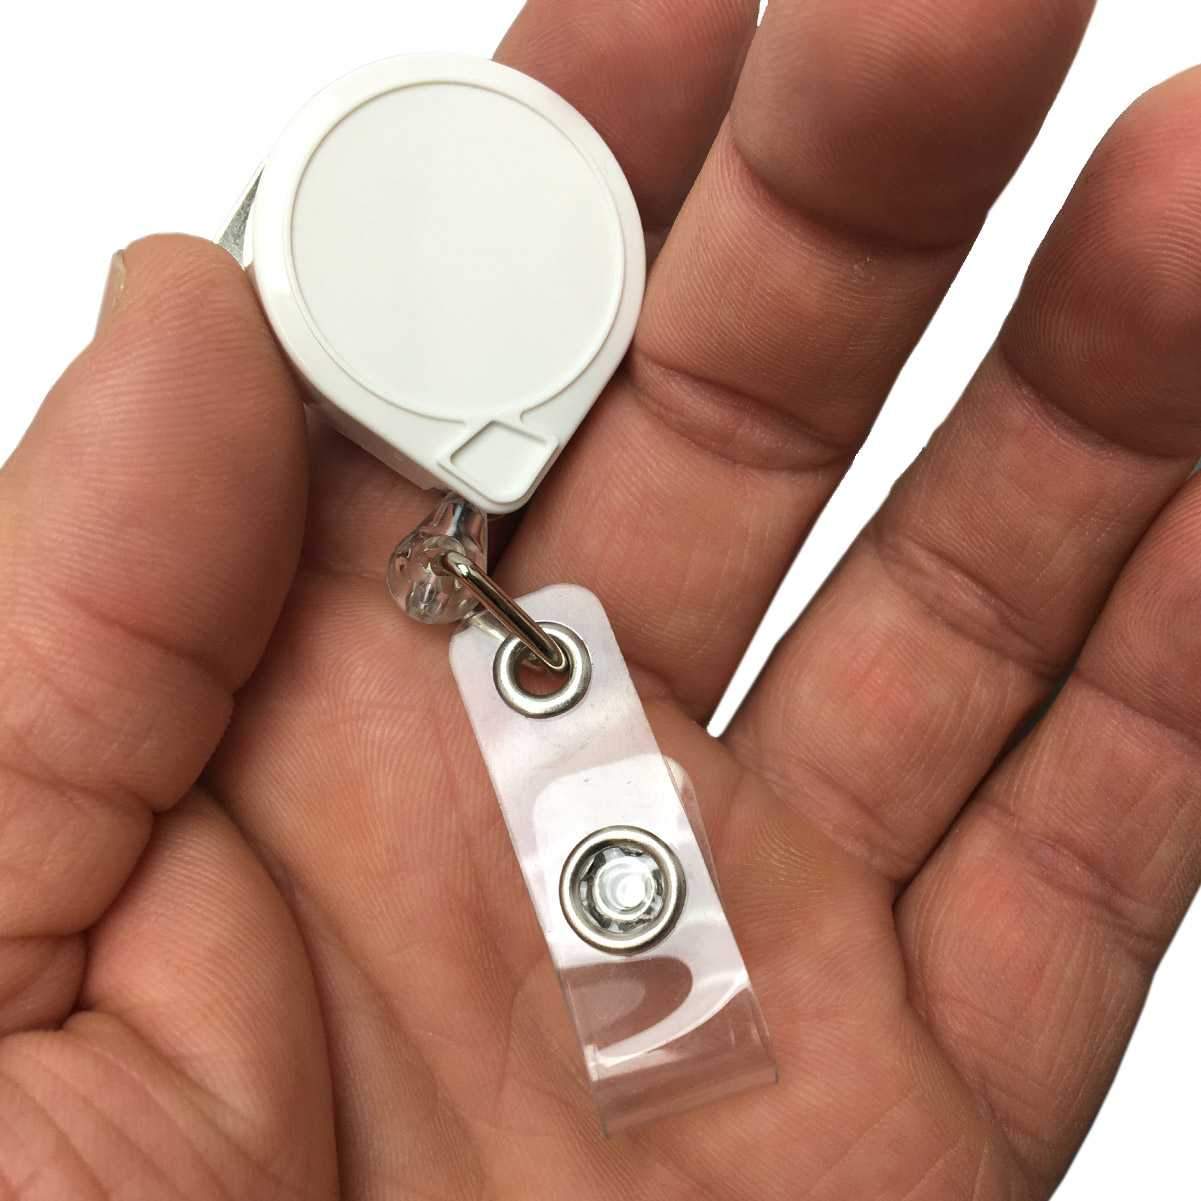 MINI-BAK® Retractable Badge Holder – KEY-BAK